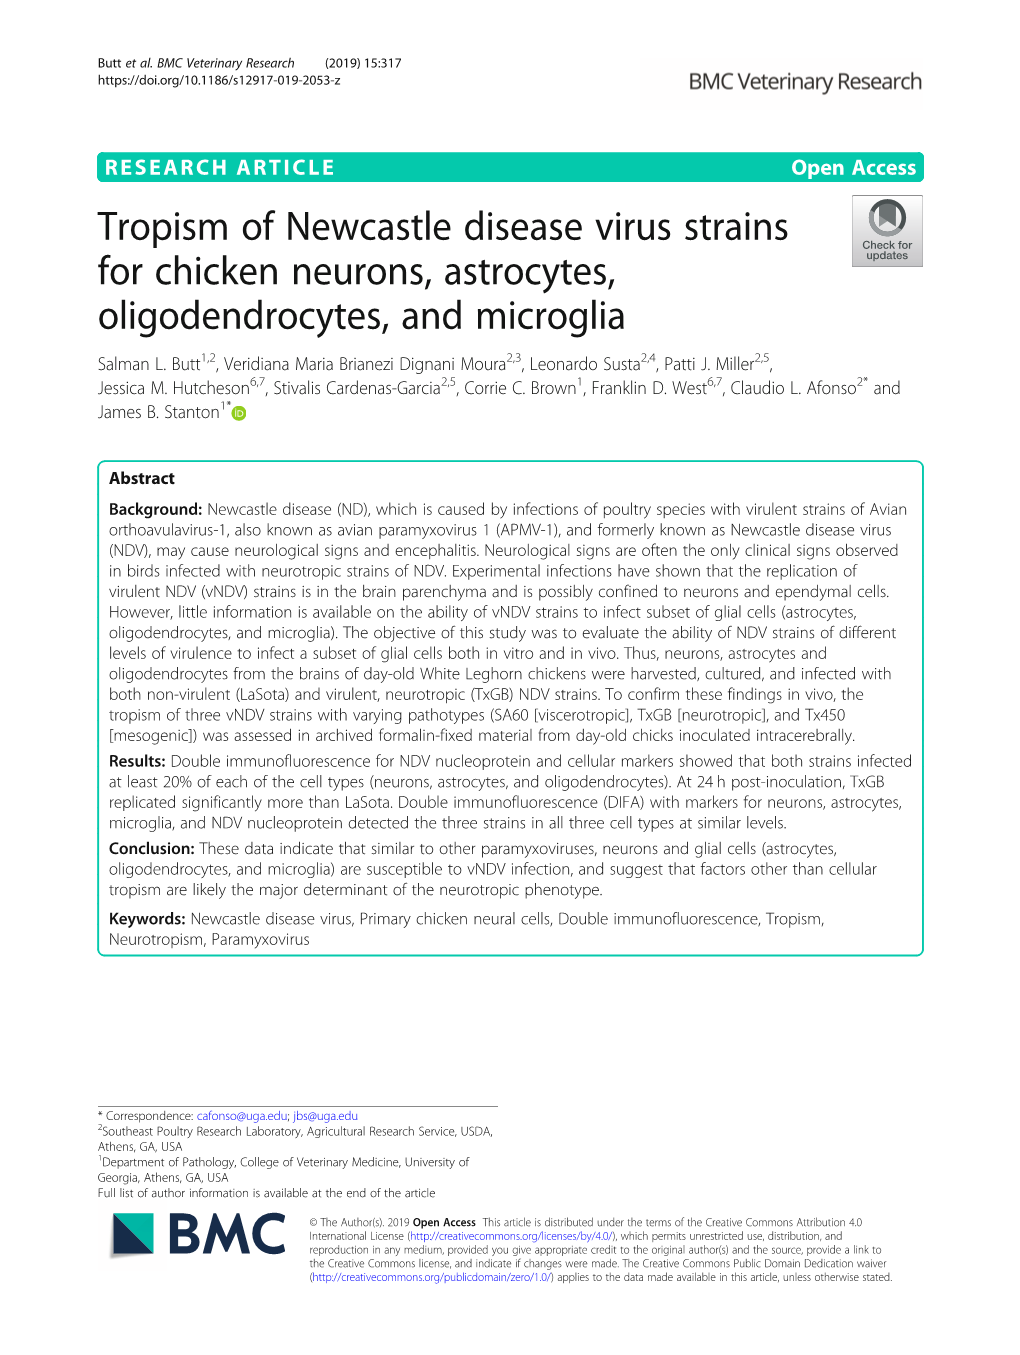 Tropism of Newcastle Disease Virus Strains for Chicken Neurons, Astrocytes, Oligodendrocytes, and Microglia Salman L